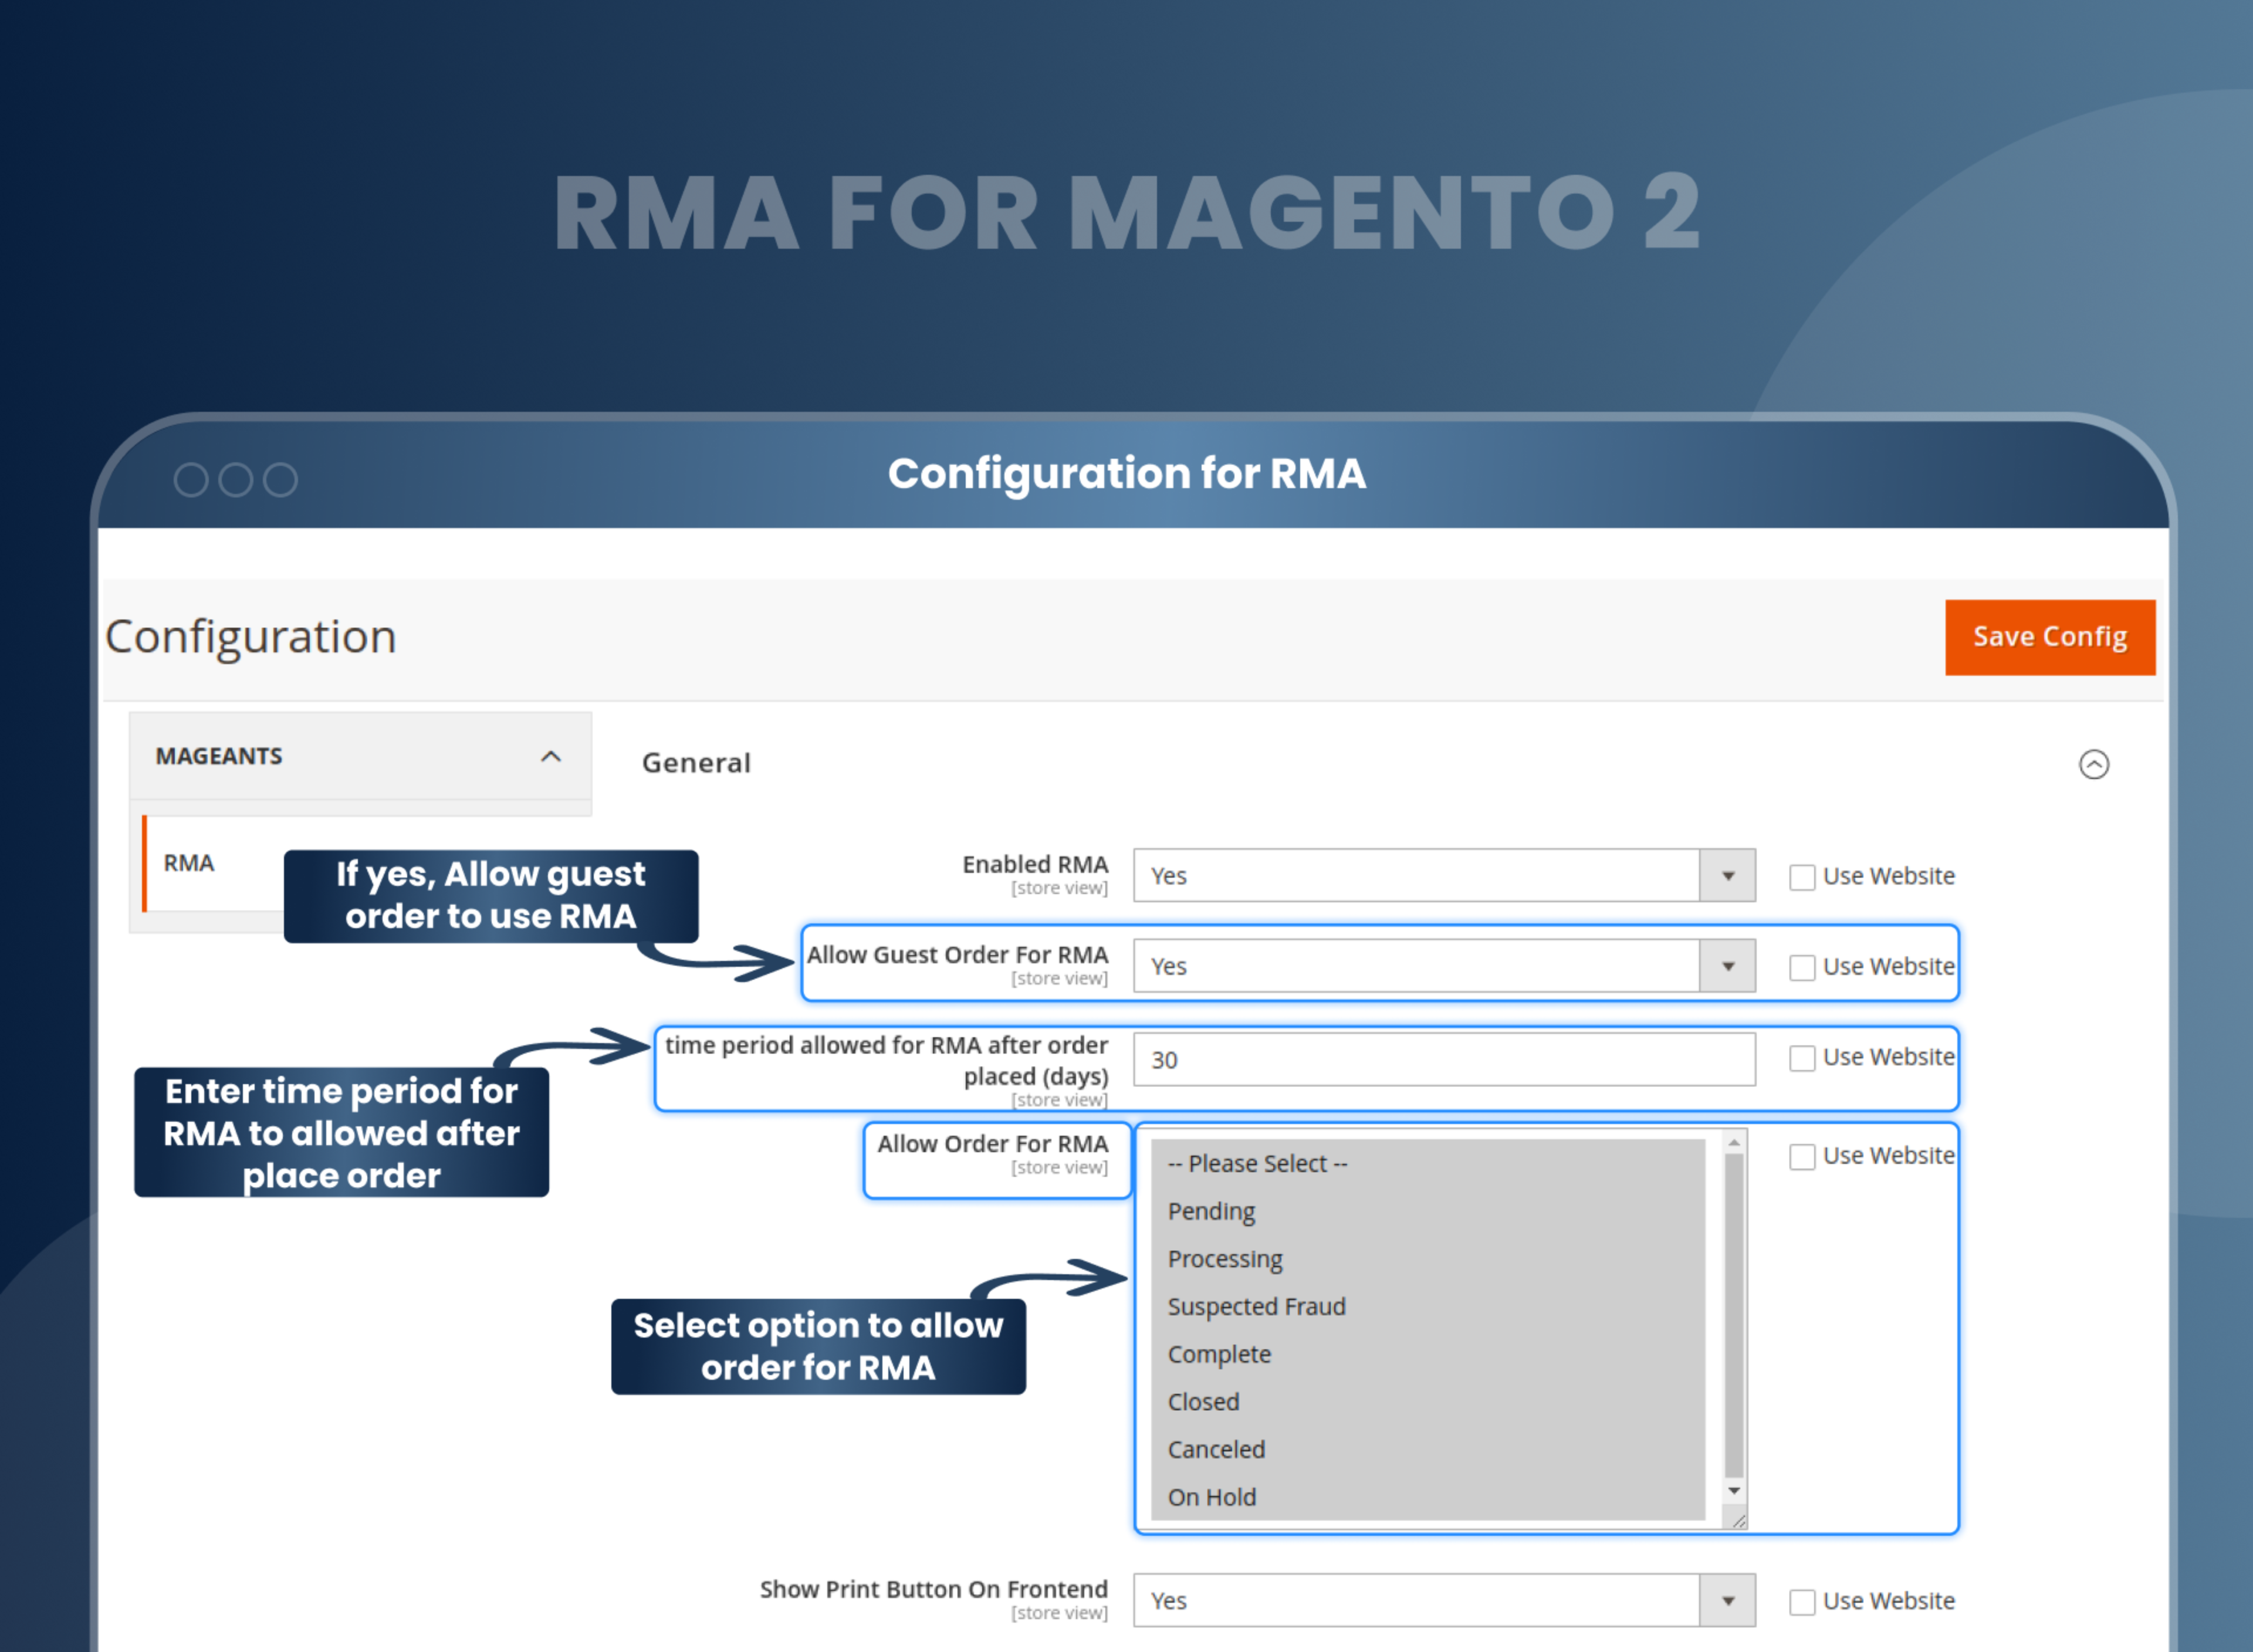  Configuration for RMA